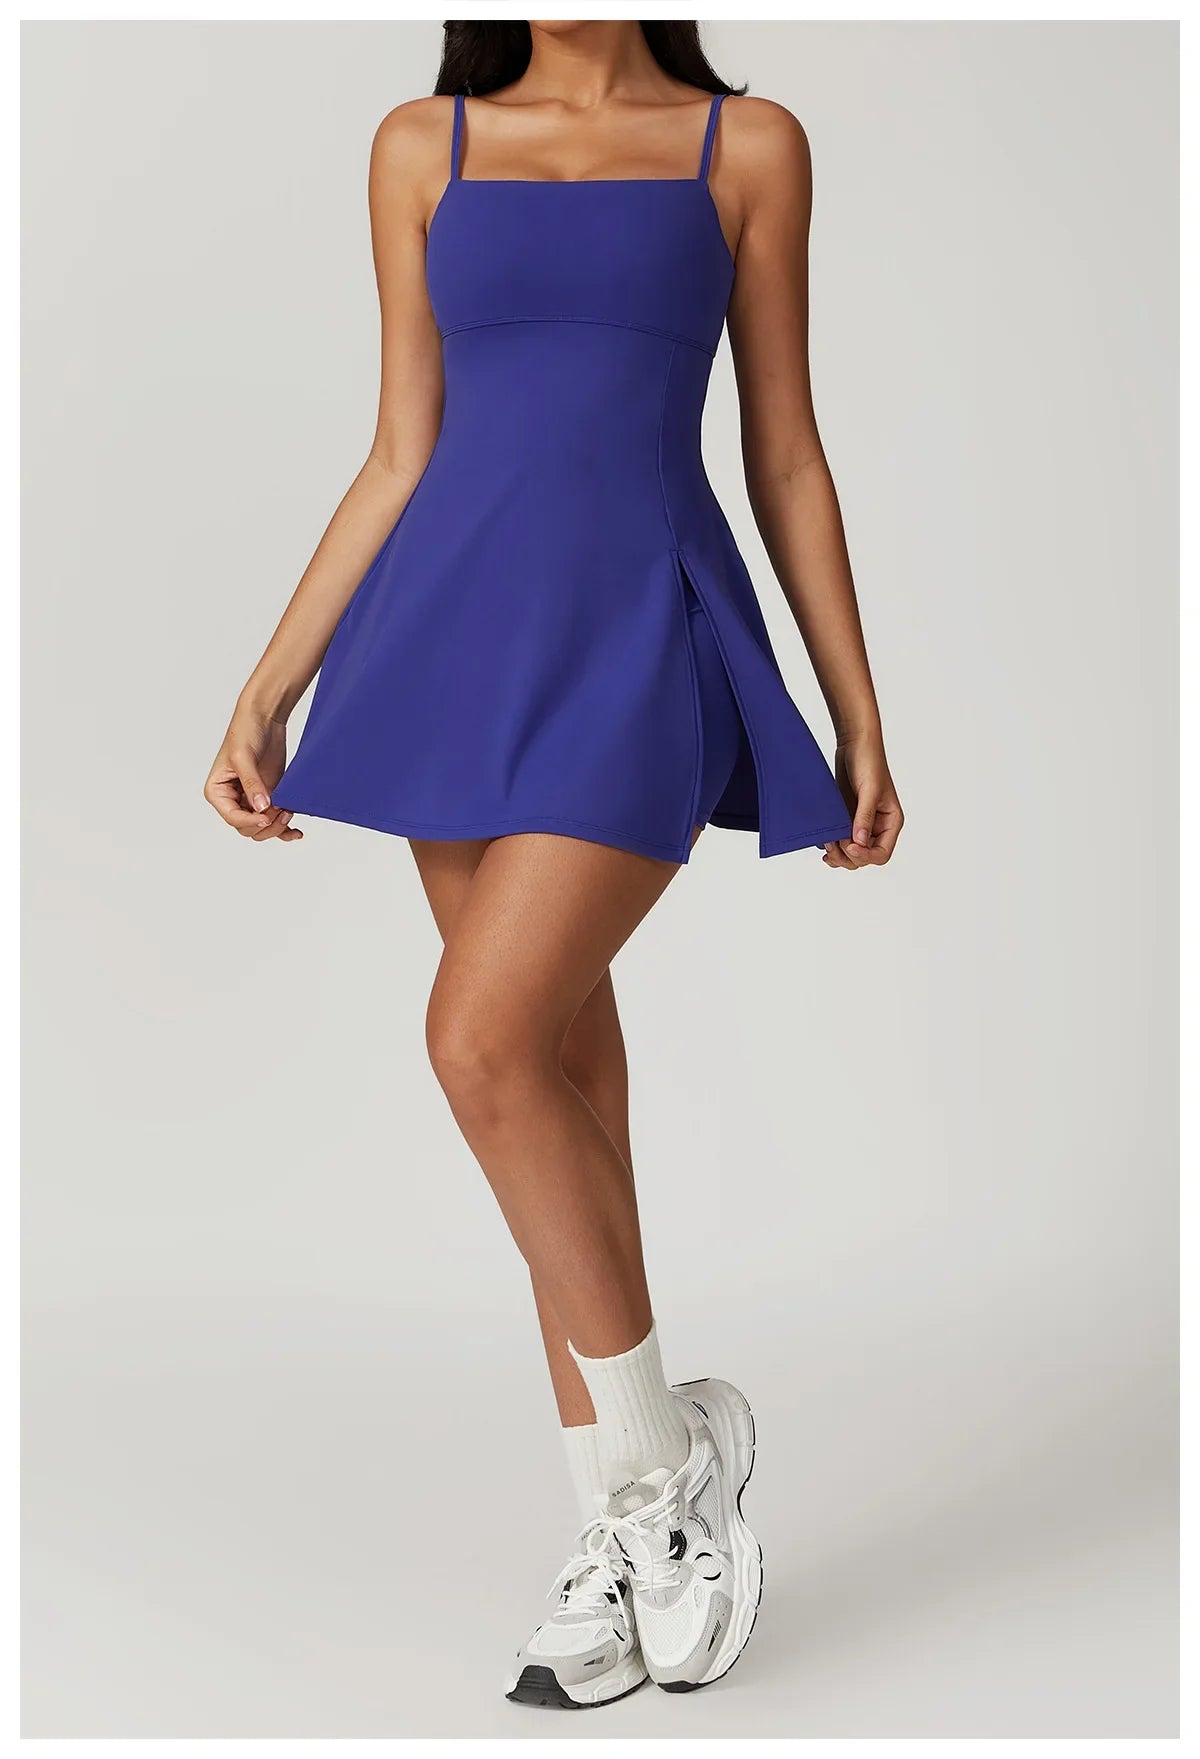 Sporty Dresses- The Fashion Dress for Tennis, Golf, and Dance- - Pekosa Women Fashion